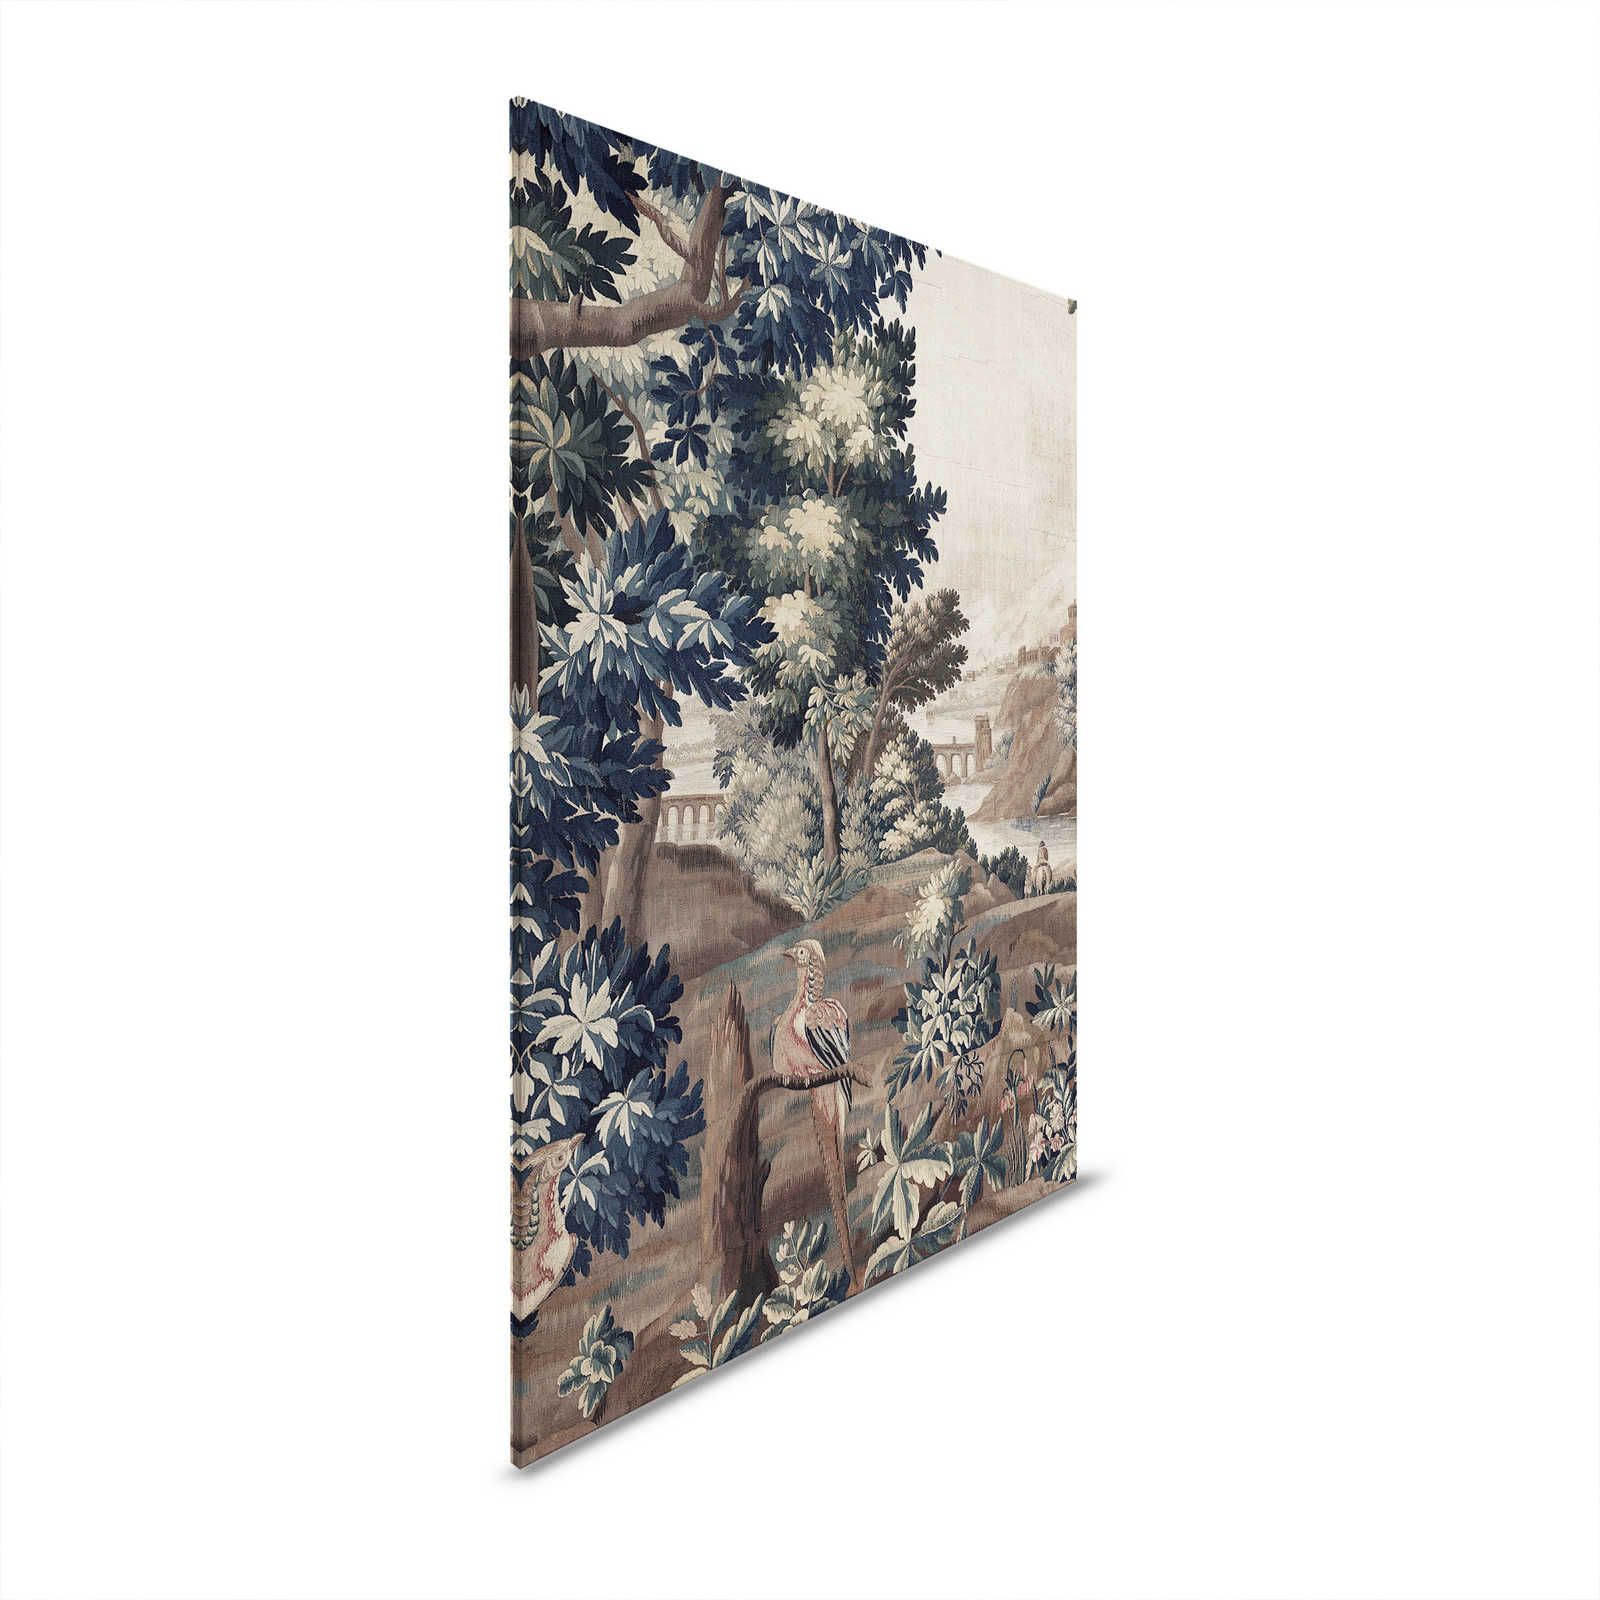 Gobelin Gallery 2 - Tableau tapisserie style art classique - 1,20 m x 0,80 m
